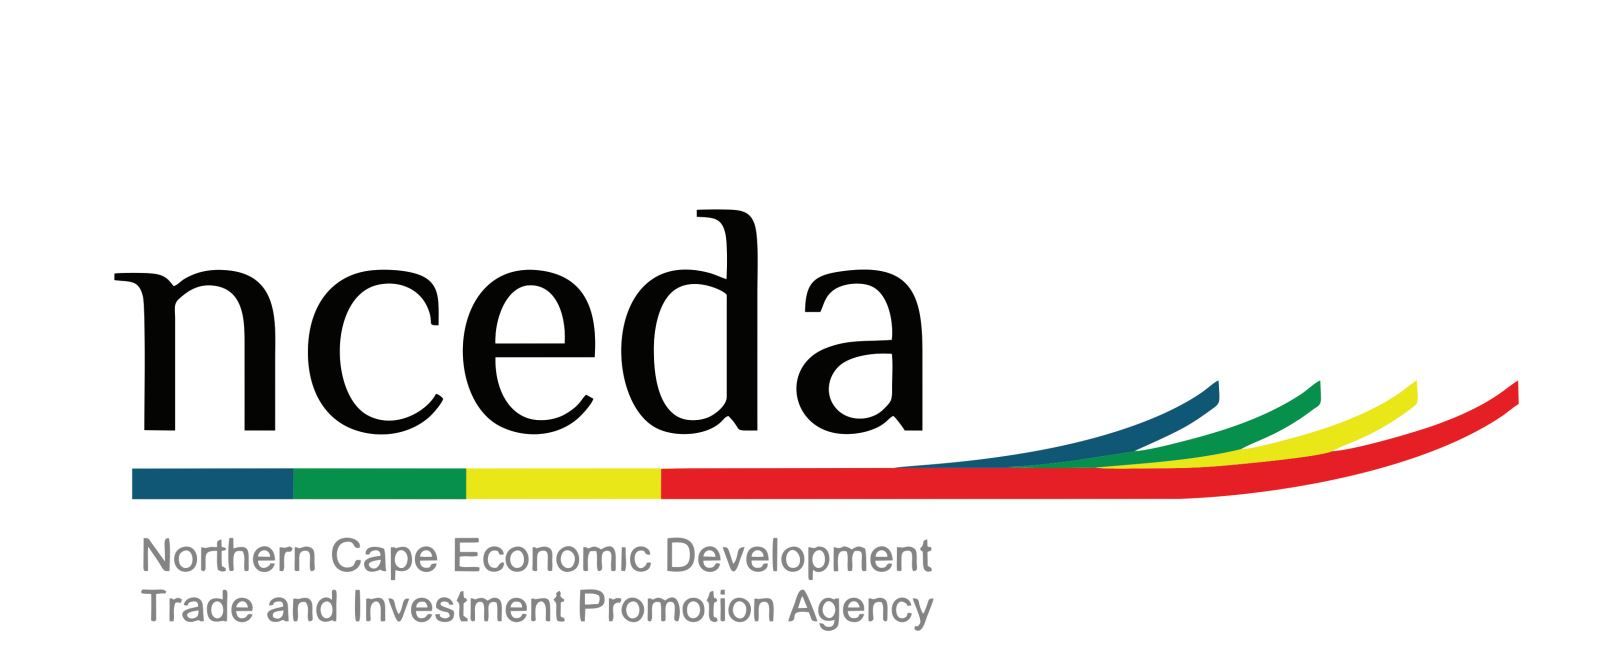 Northern Cape Economic Development Agency